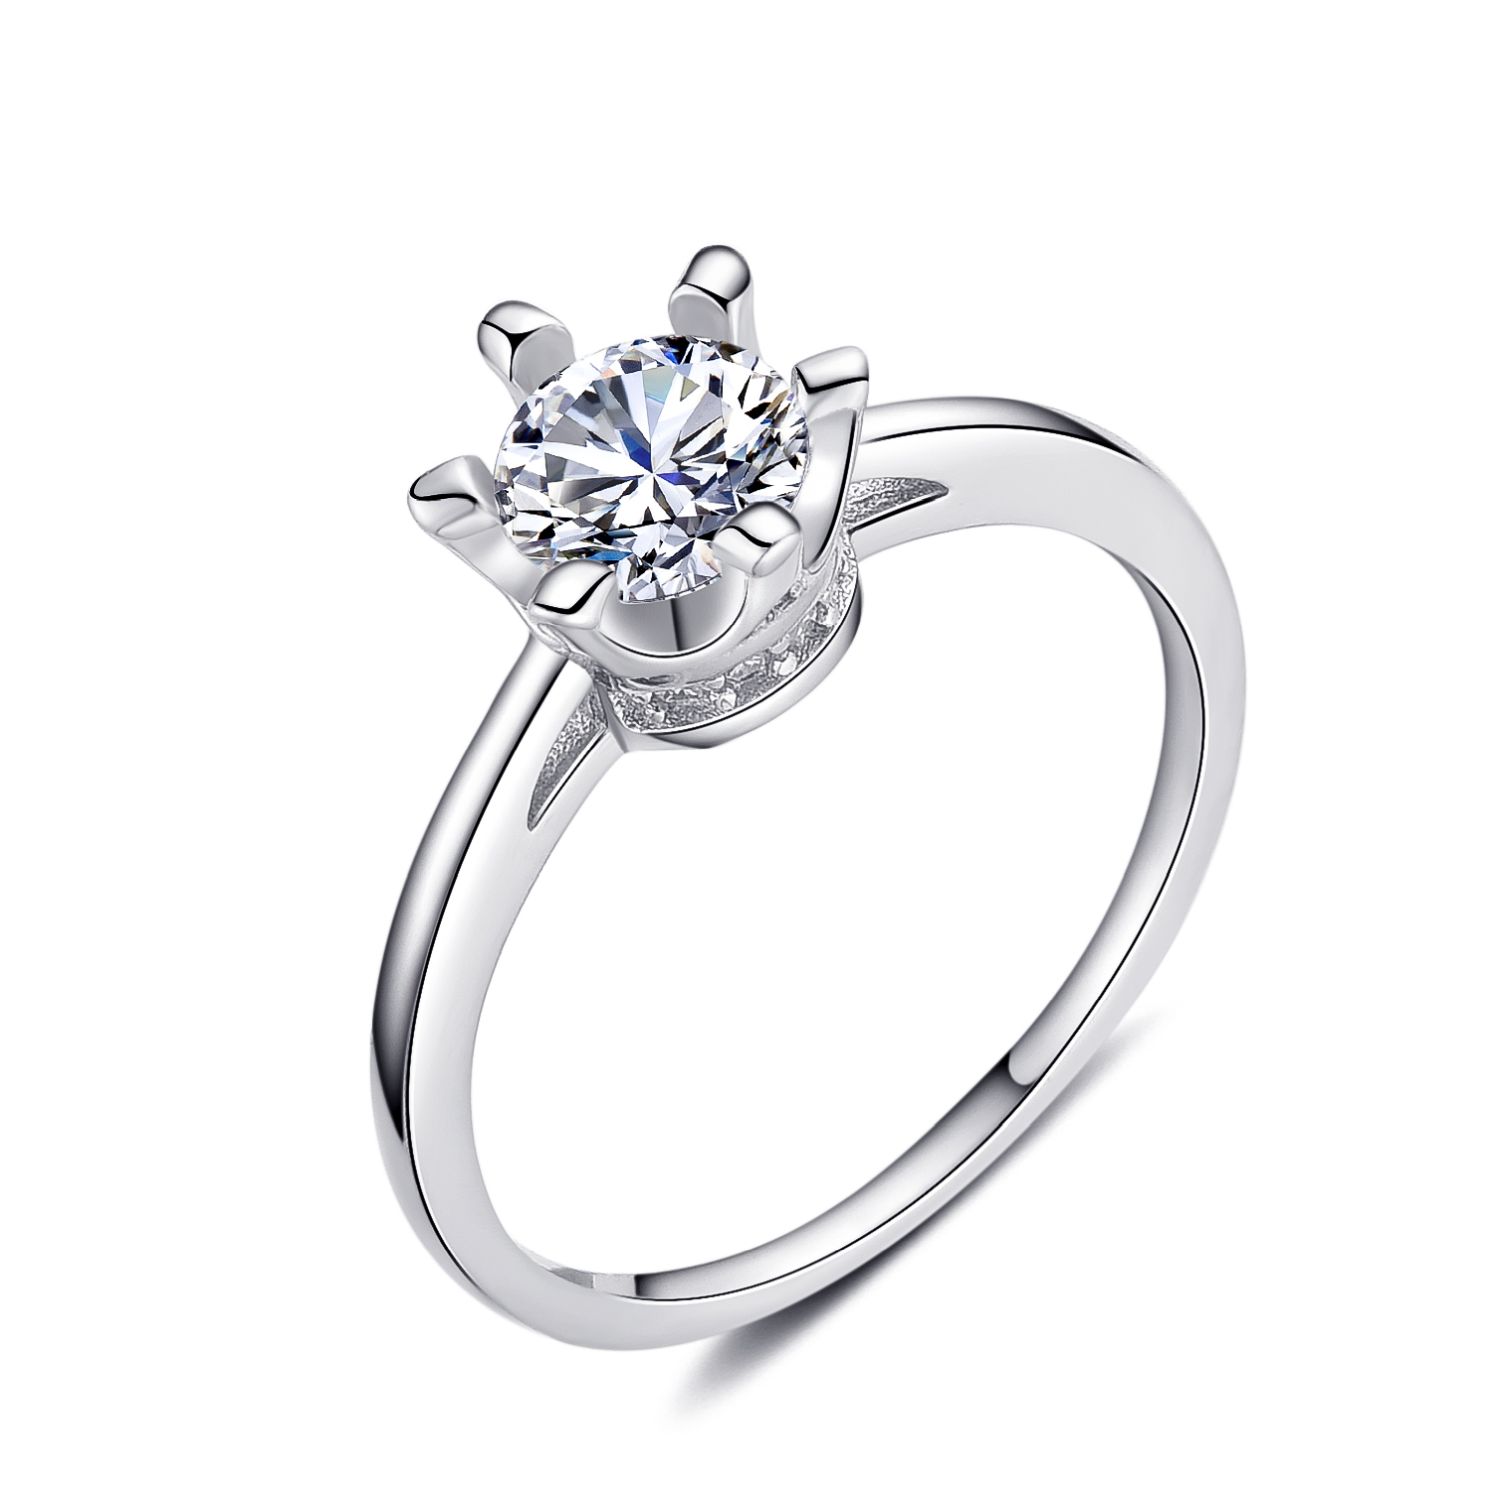 MOISS Moiss stříbrný prsten KORUNKA R0000546 Velikost 59 mm R0000551